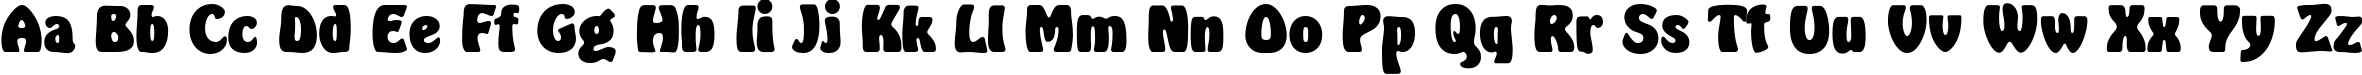 Пример написания английского алфавита шрифтом Bulka